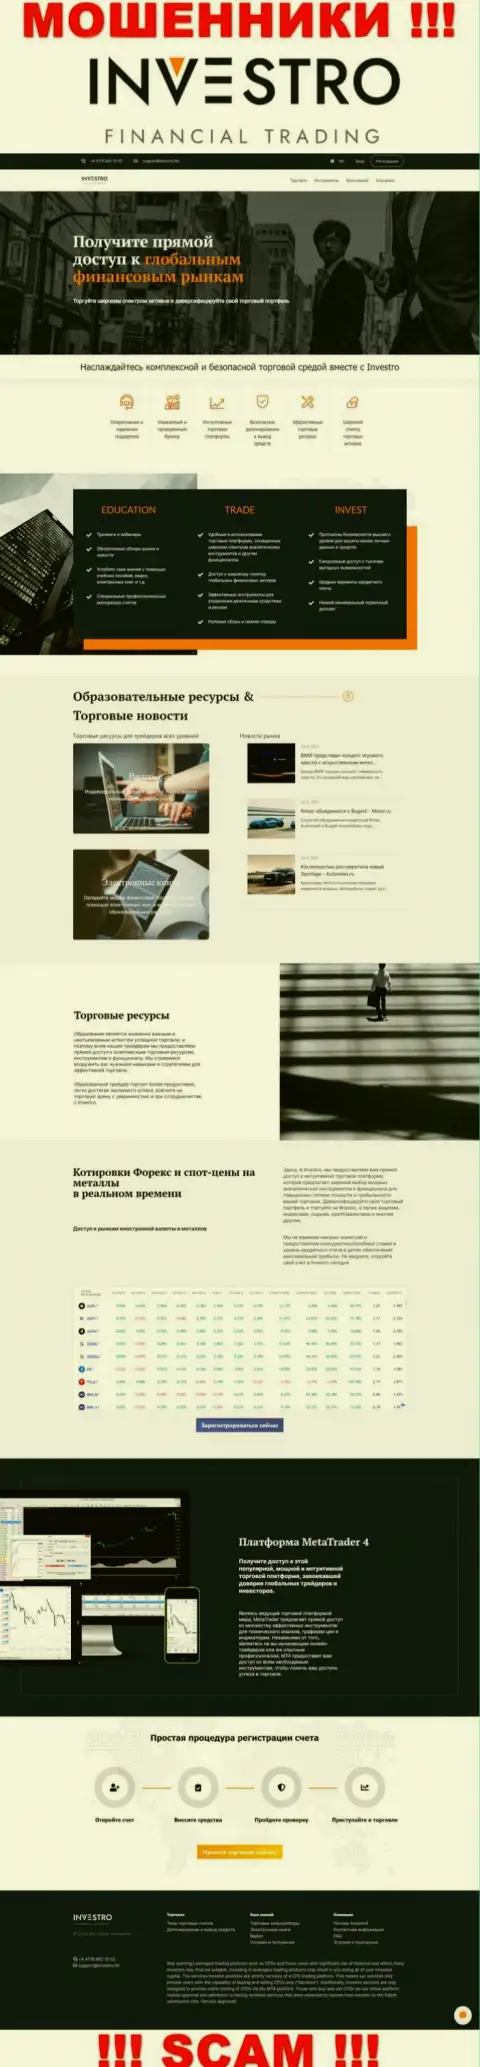 Скриншот официального веб-сервиса Сейф Солютион КФТ - Investro Fm